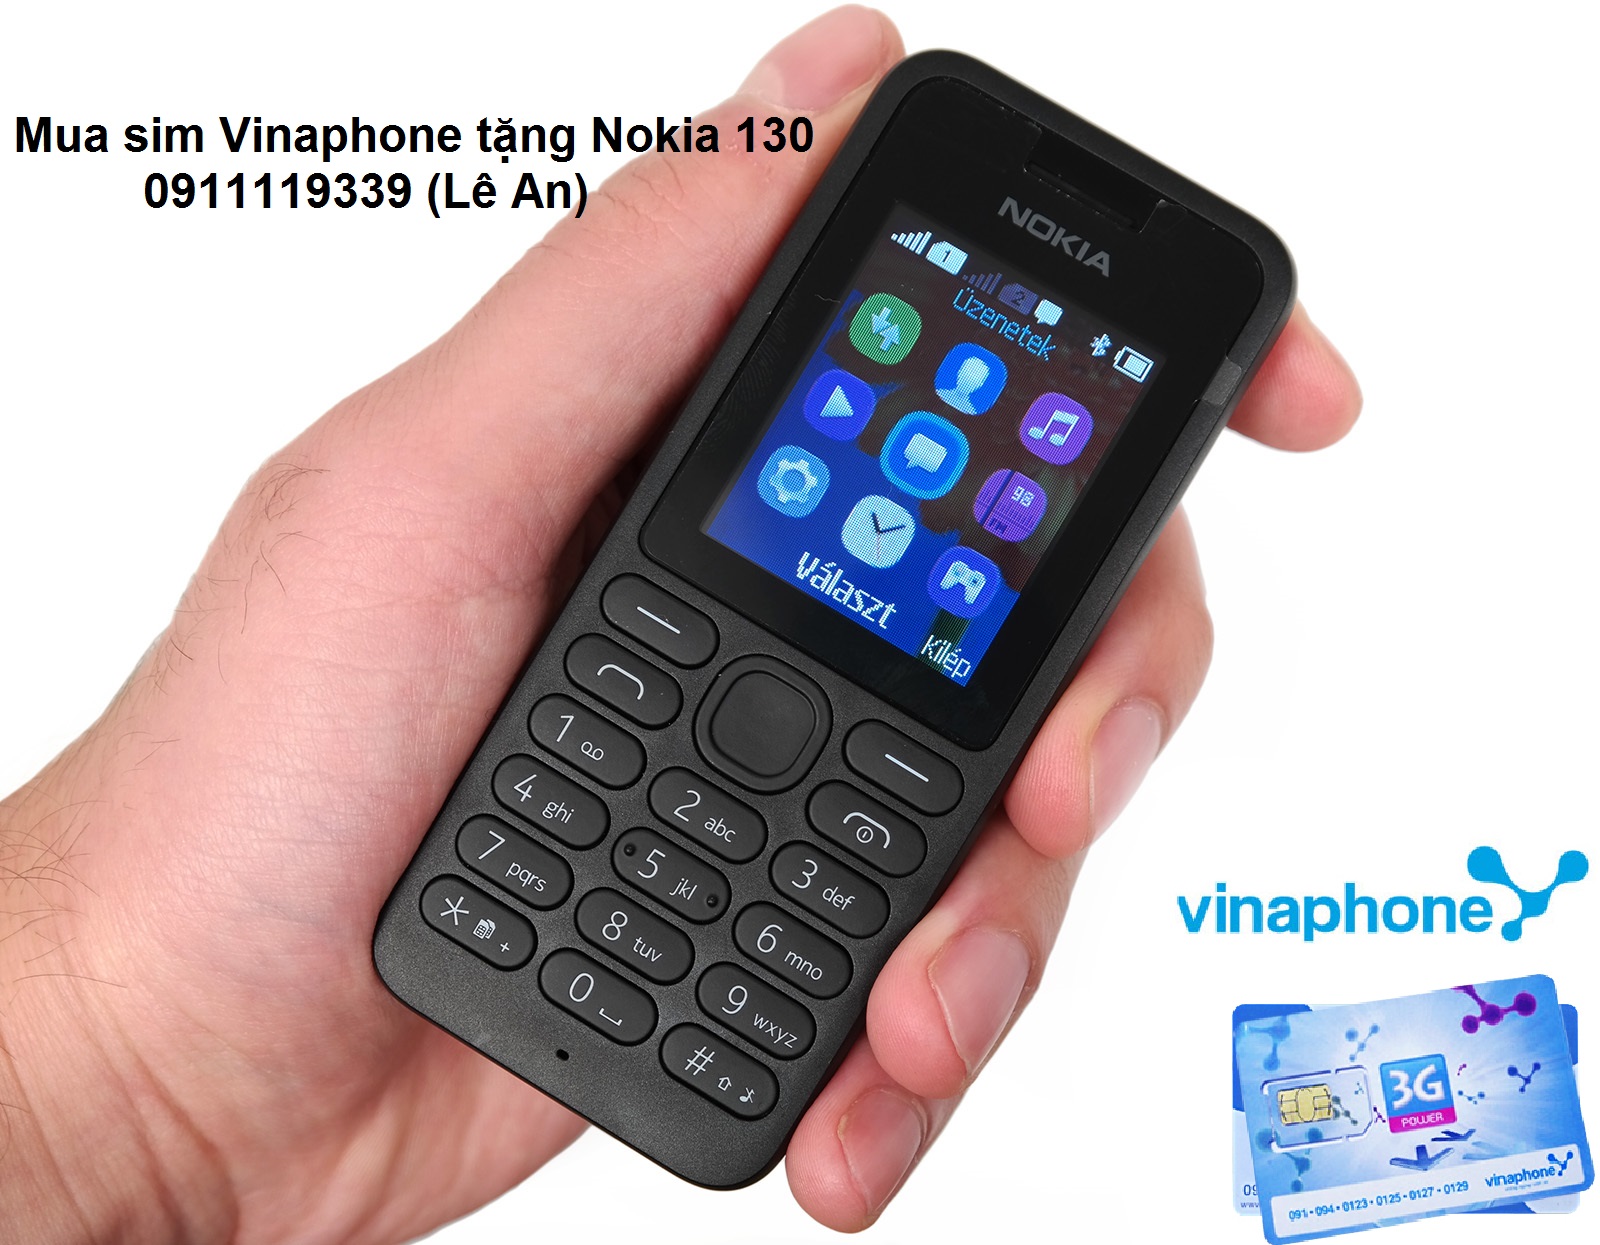 Nokia 130 Vinaphone